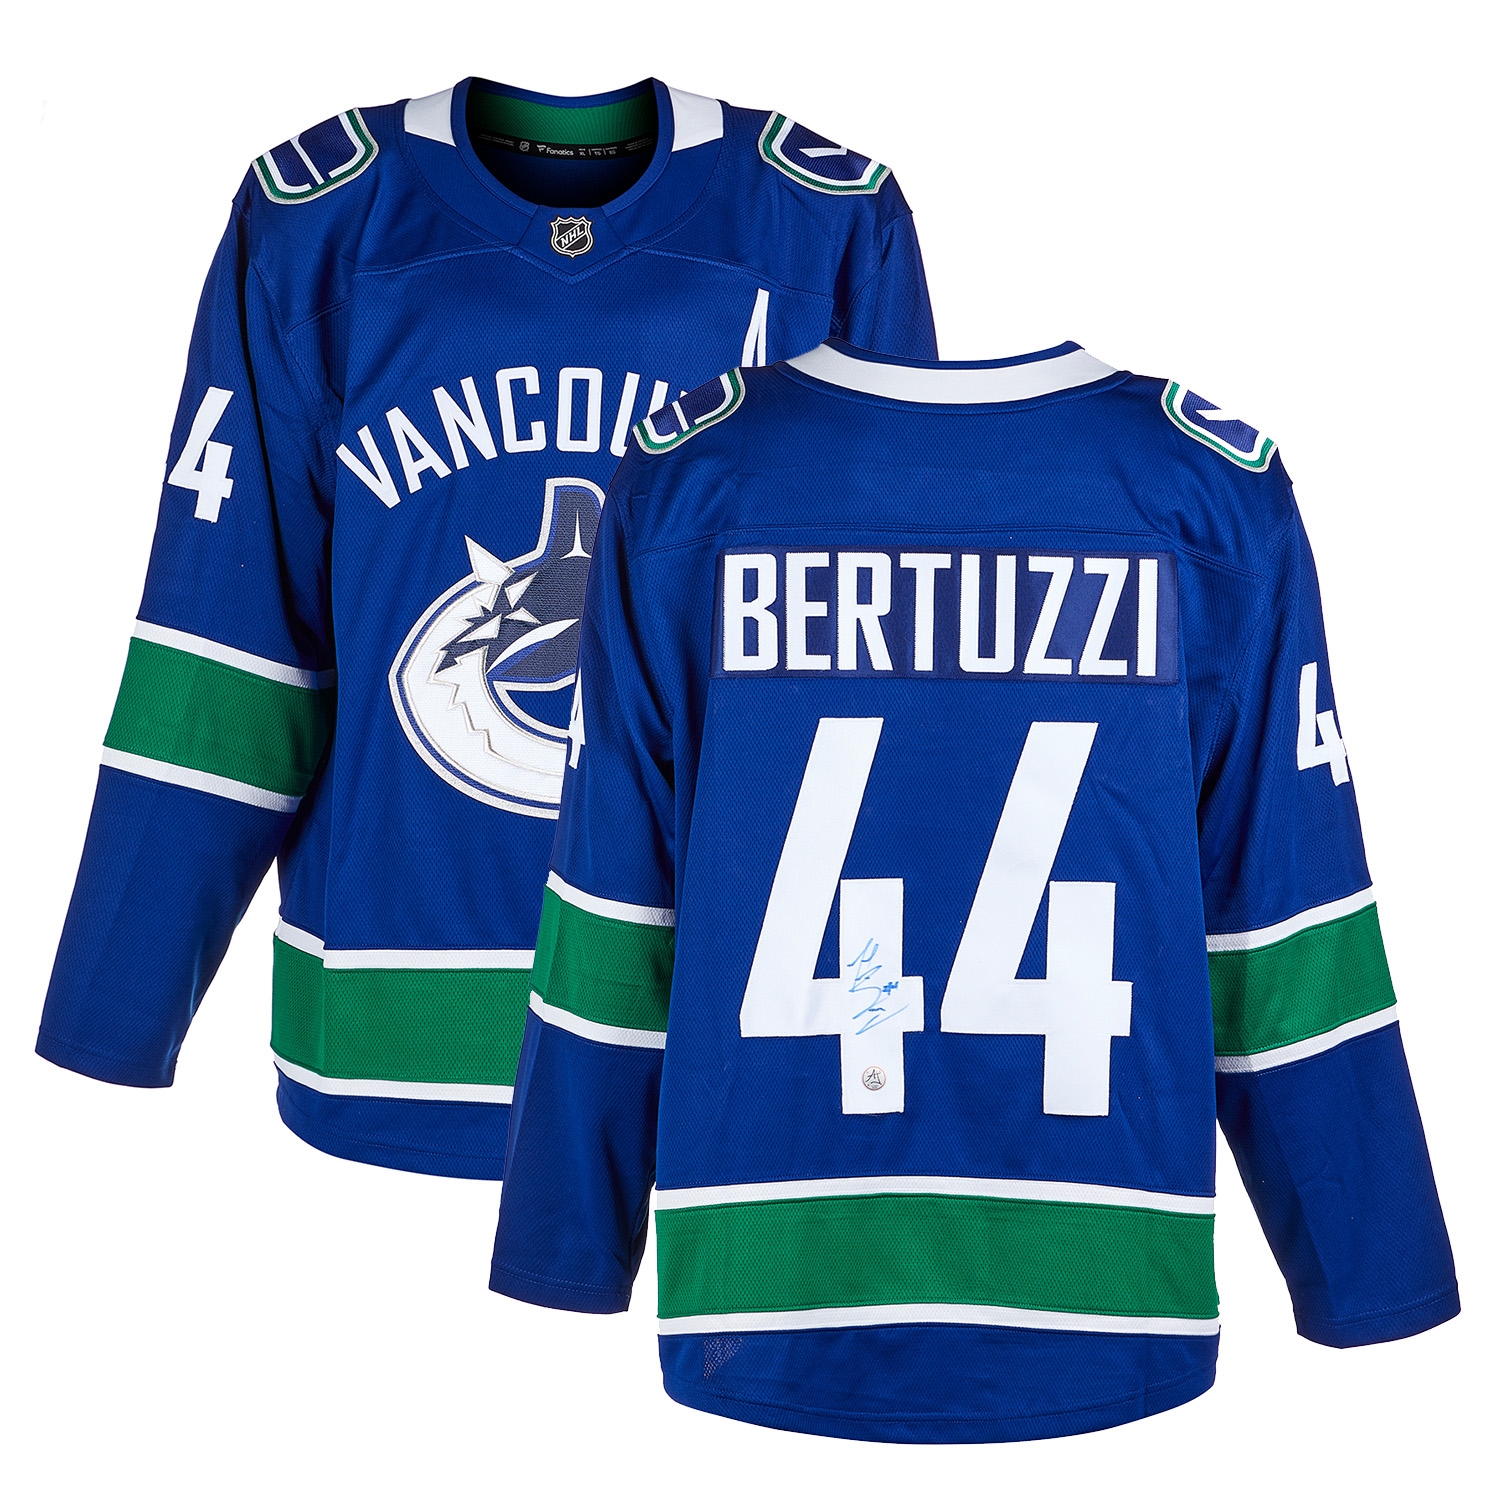 Todd Bertuzzi Autographed Vancouver Canucks Blue Fanatics Jersey